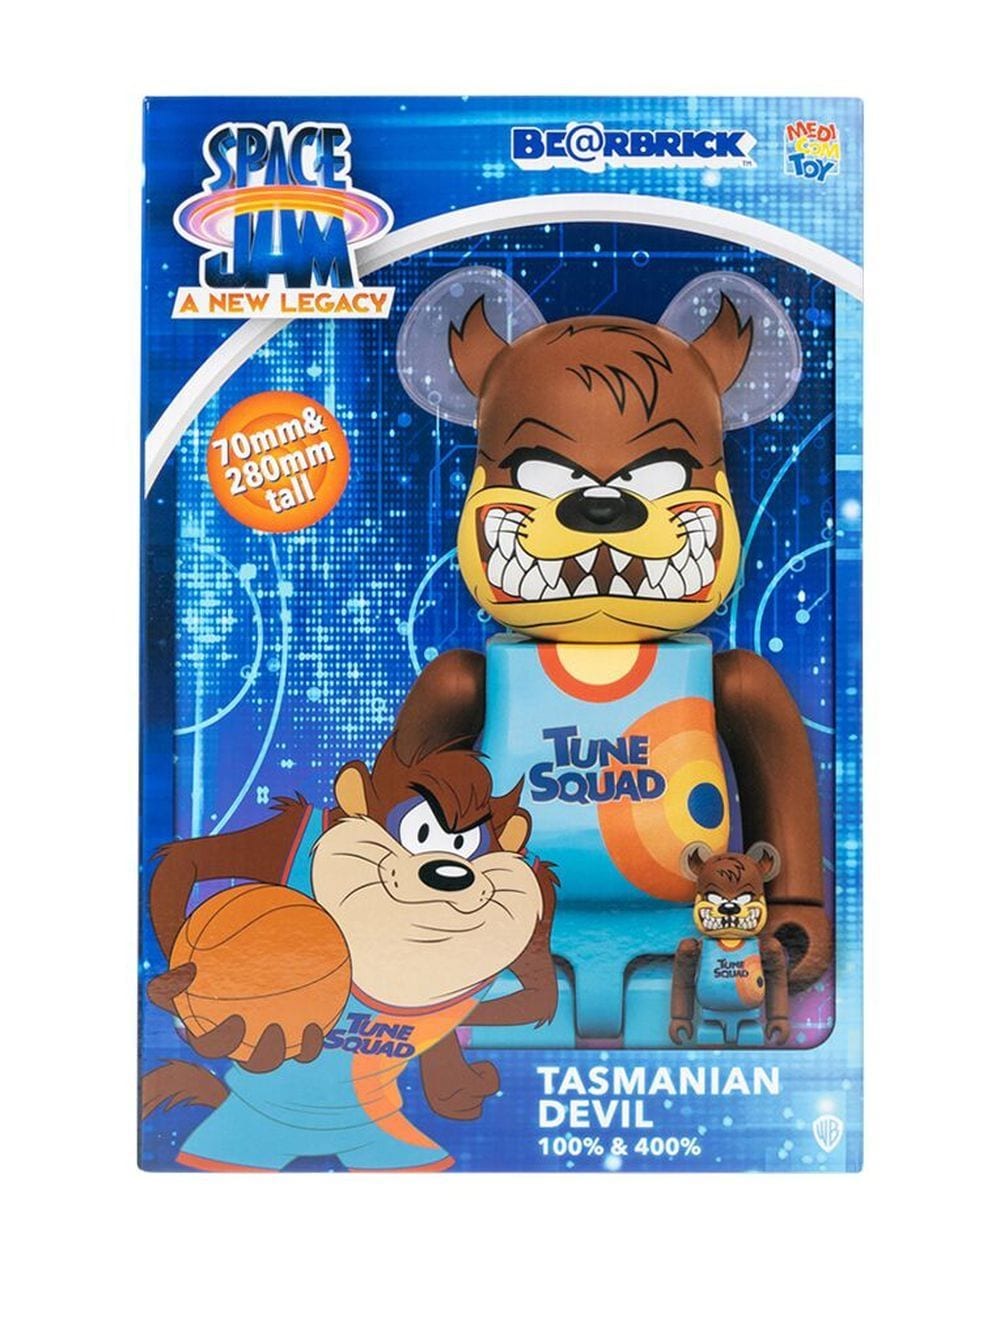 Medicom Toy x Space Jam Tasmanian Devil BE@RBRICK Figure Set